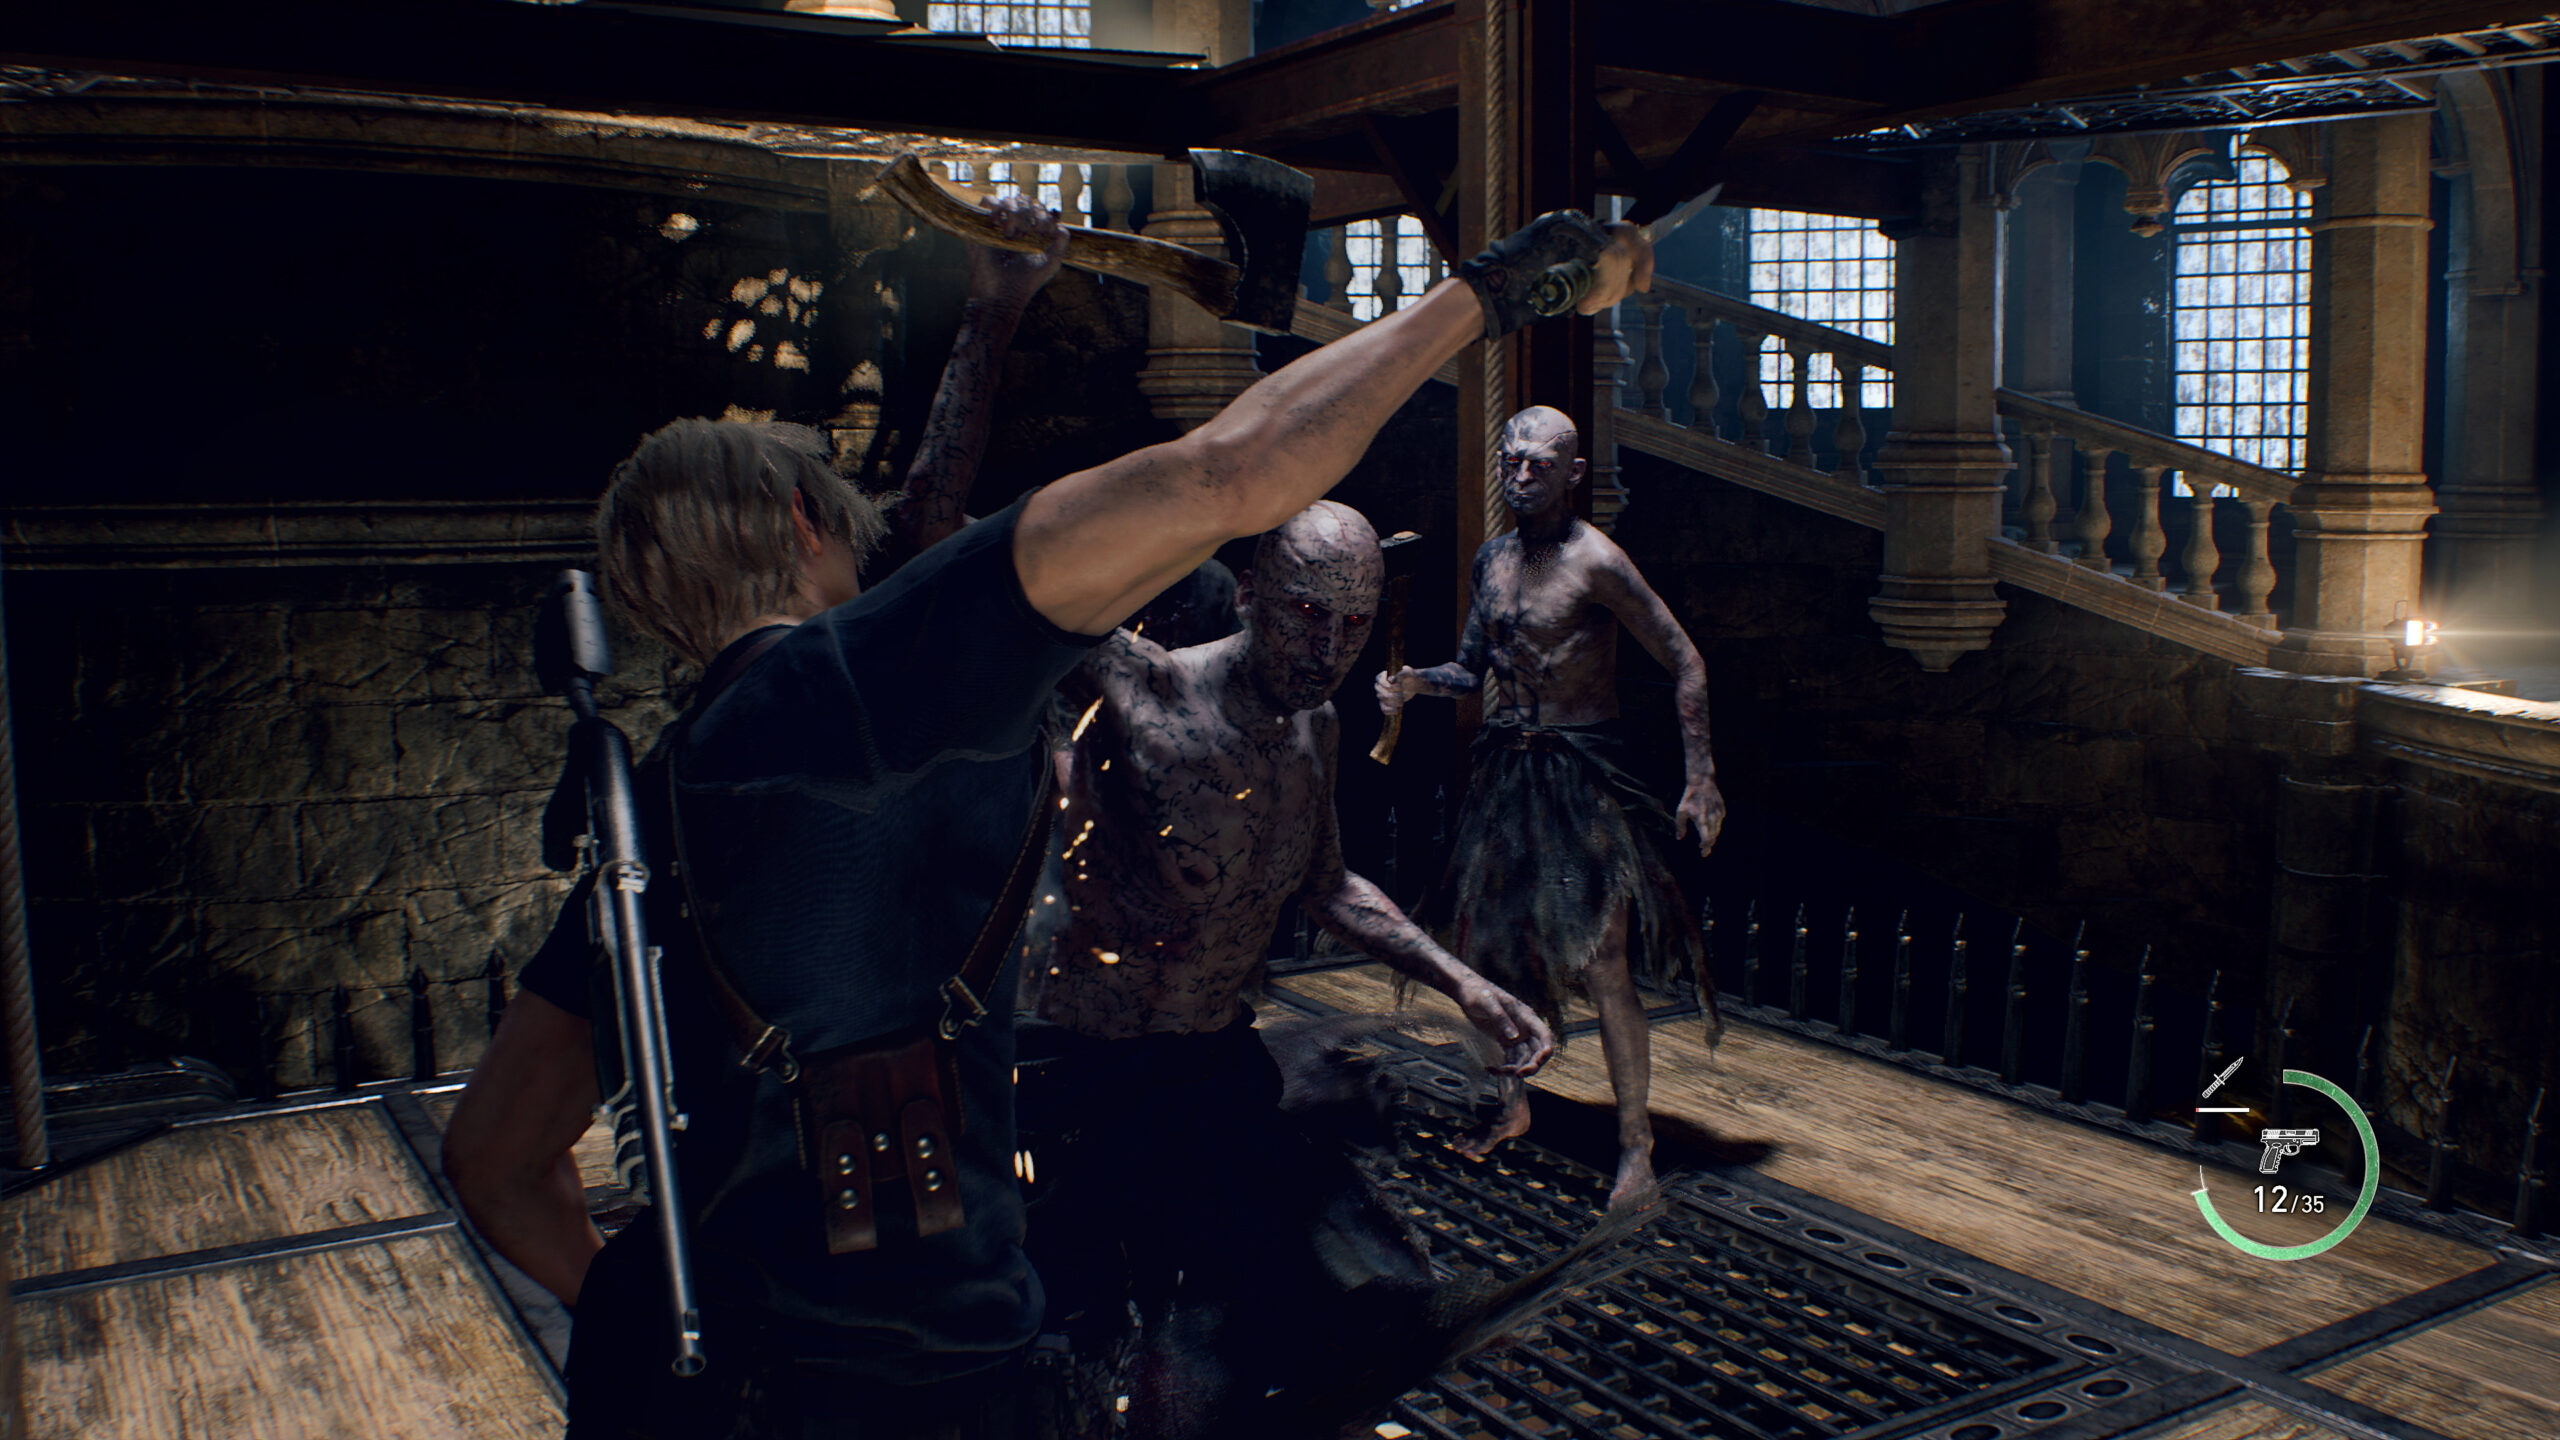 Resident Evil 4 Remake Trailer Teases Krauser Fight, Reveals Upcoming Demo